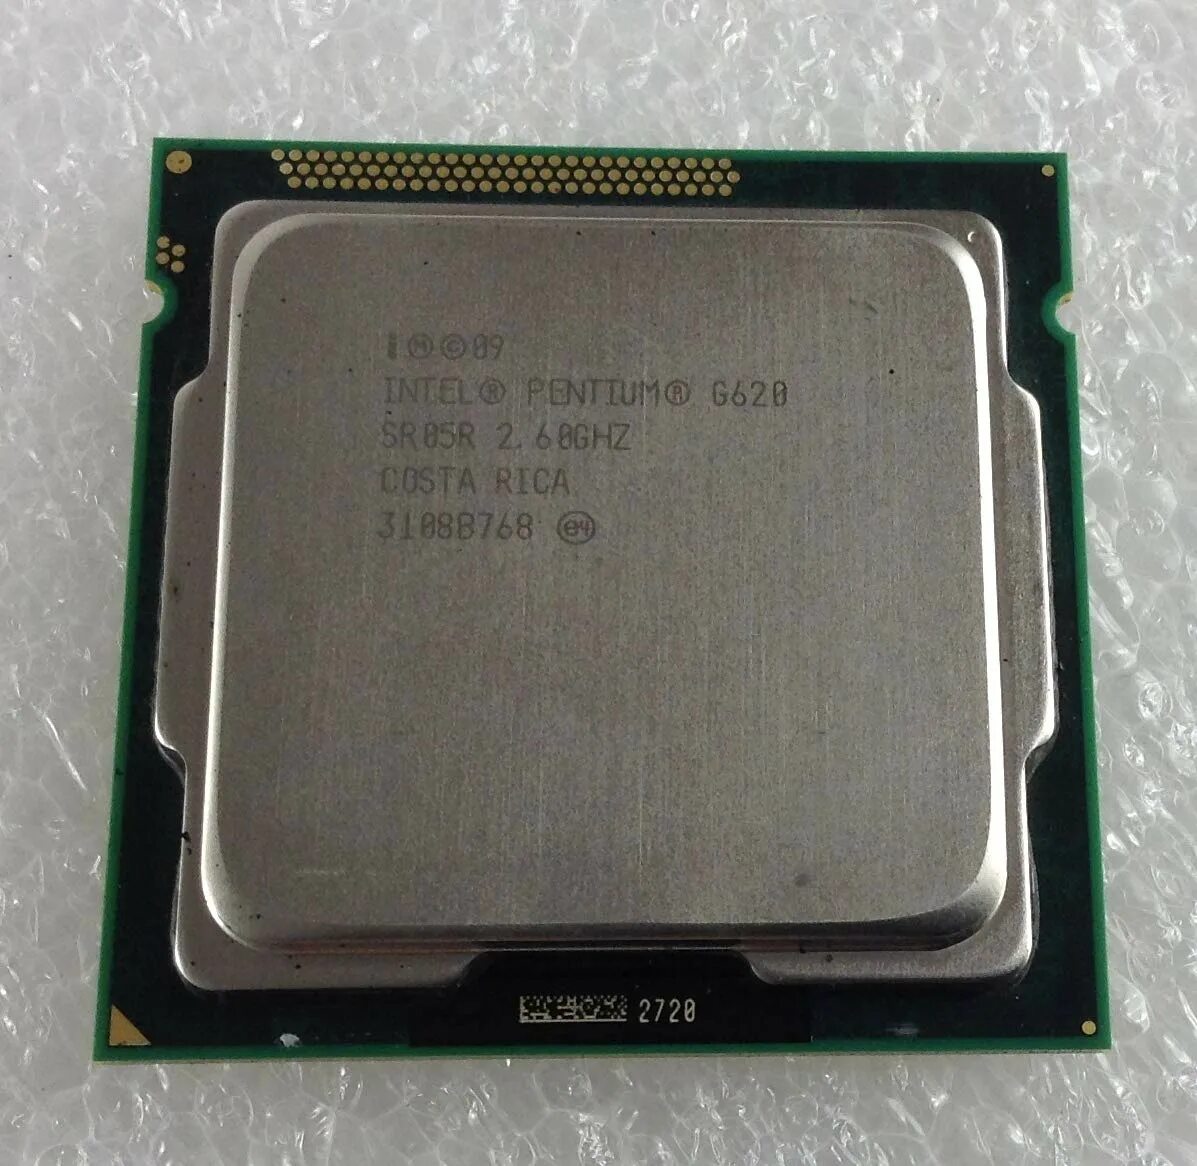 Интел 620. Пентиум g620 2 60. Intel(r) Celeron(r) CPU g550 @ 2.60GHZ. Intel Pentium (r) cpu4417u. Процессор Intel (r) Pentium (r) CPU g2020 @ 2.90GHZ 2.90 GHZ.